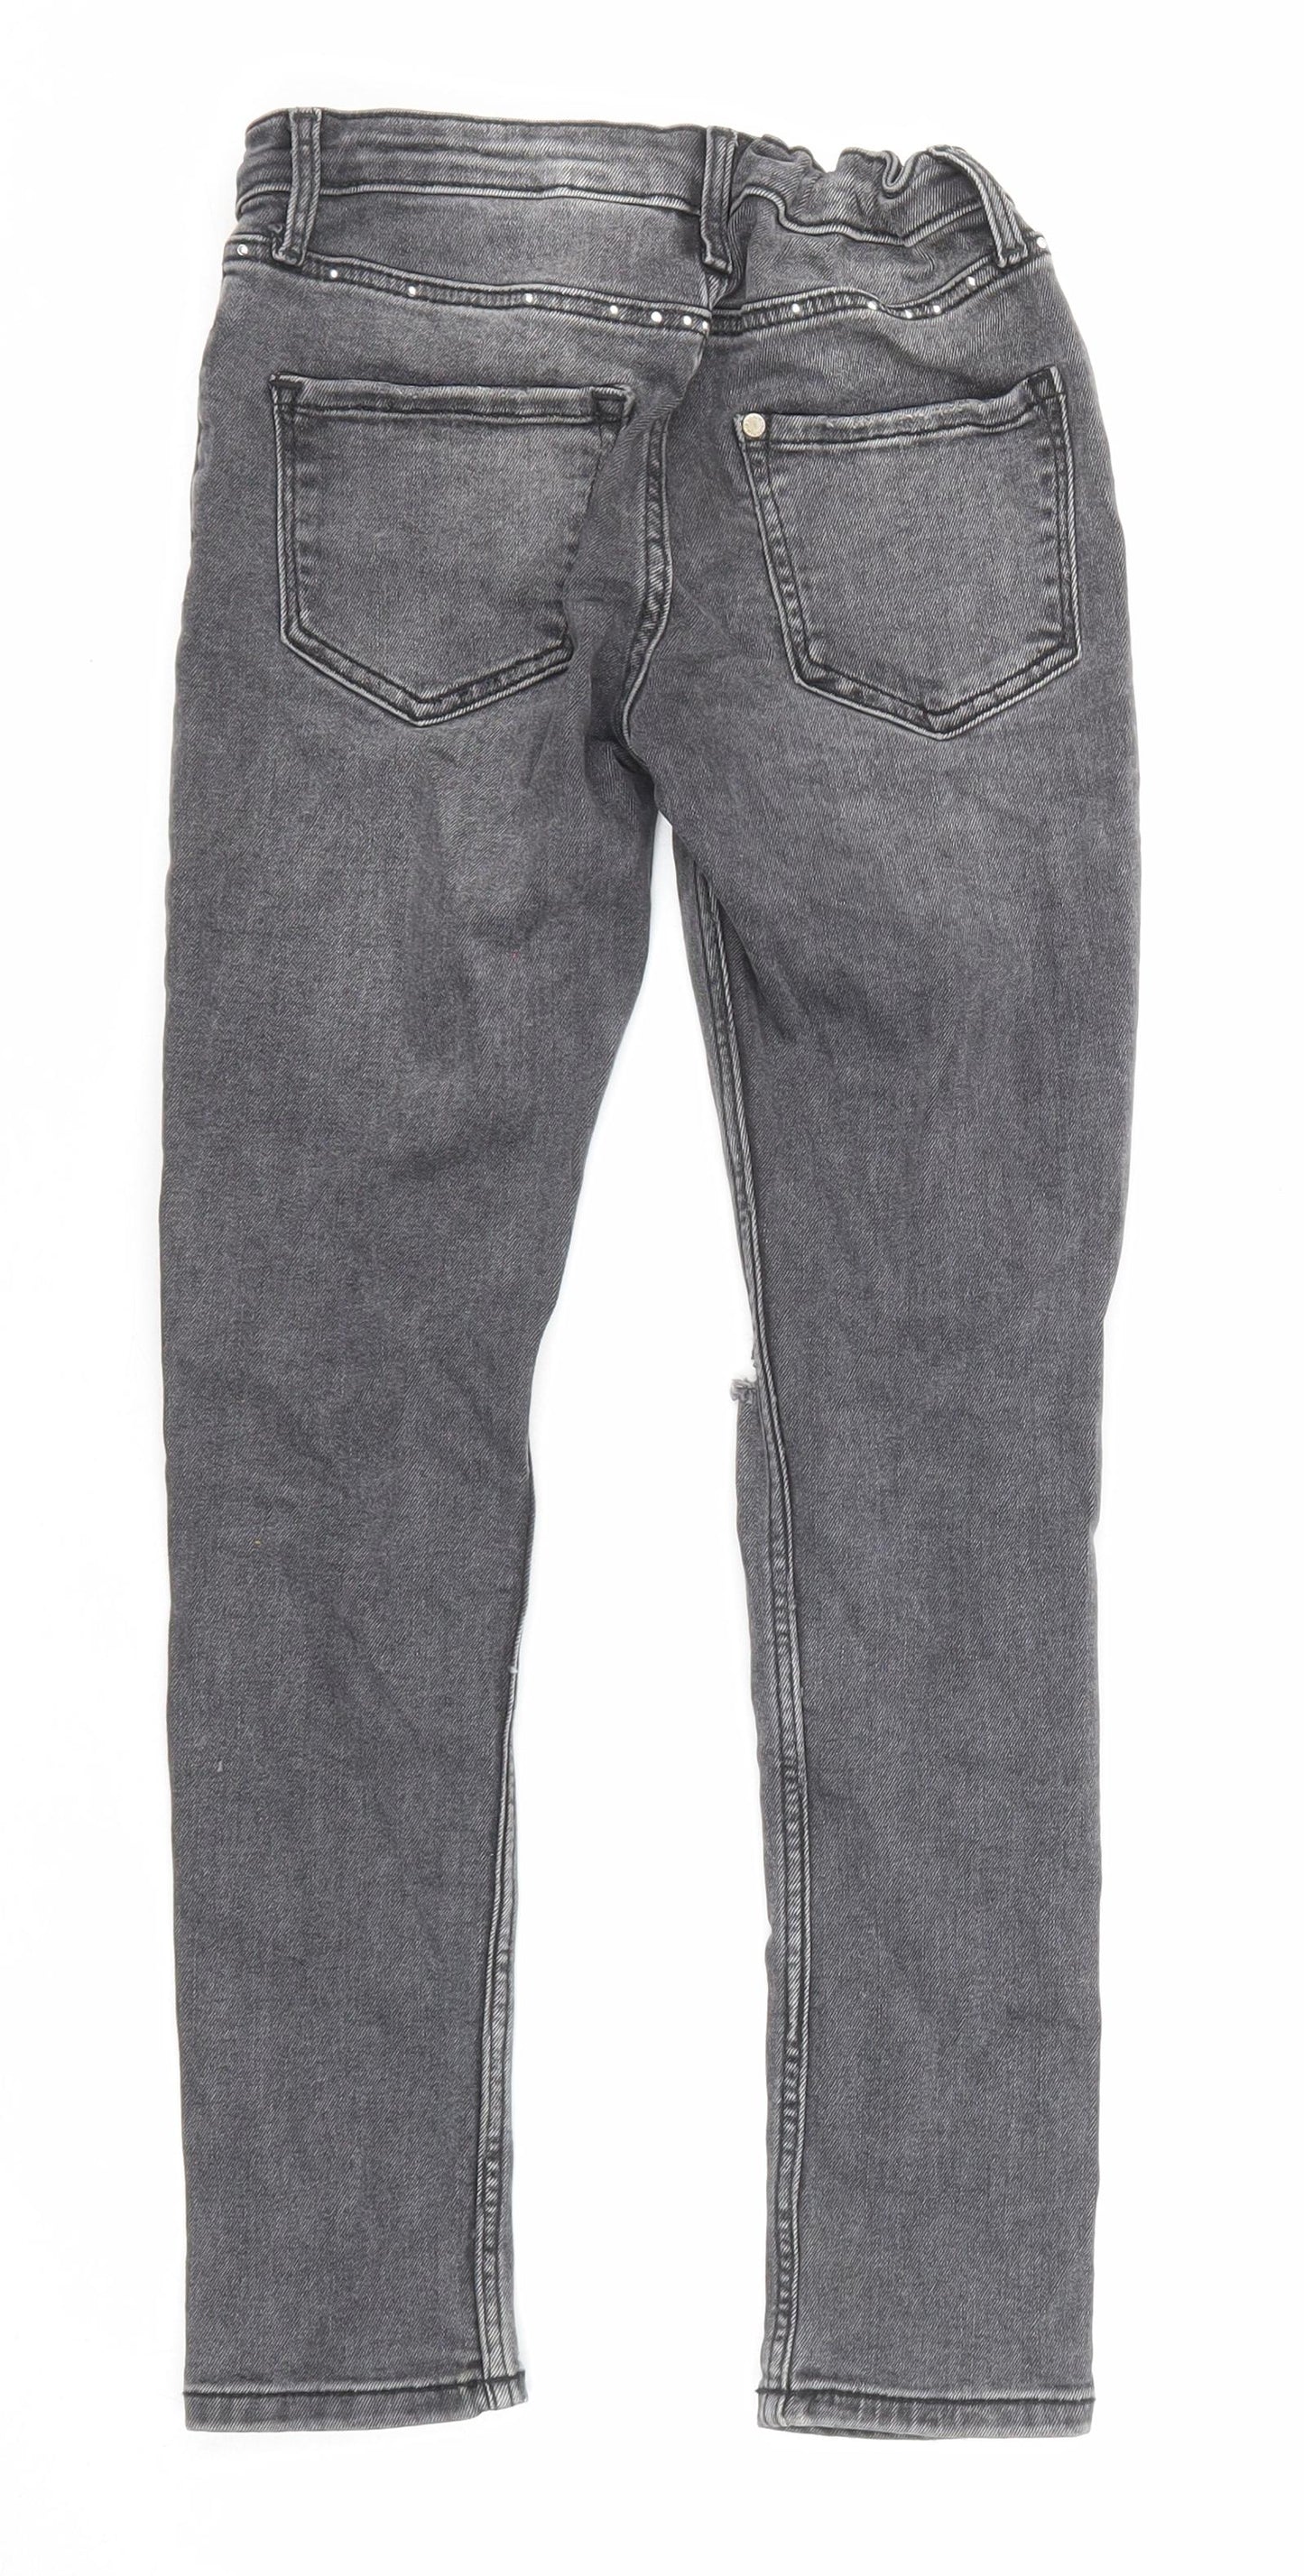 H&M Girls Black Cotton Skinny Jeans Size 9-10 Years Regular Zip - Distressed